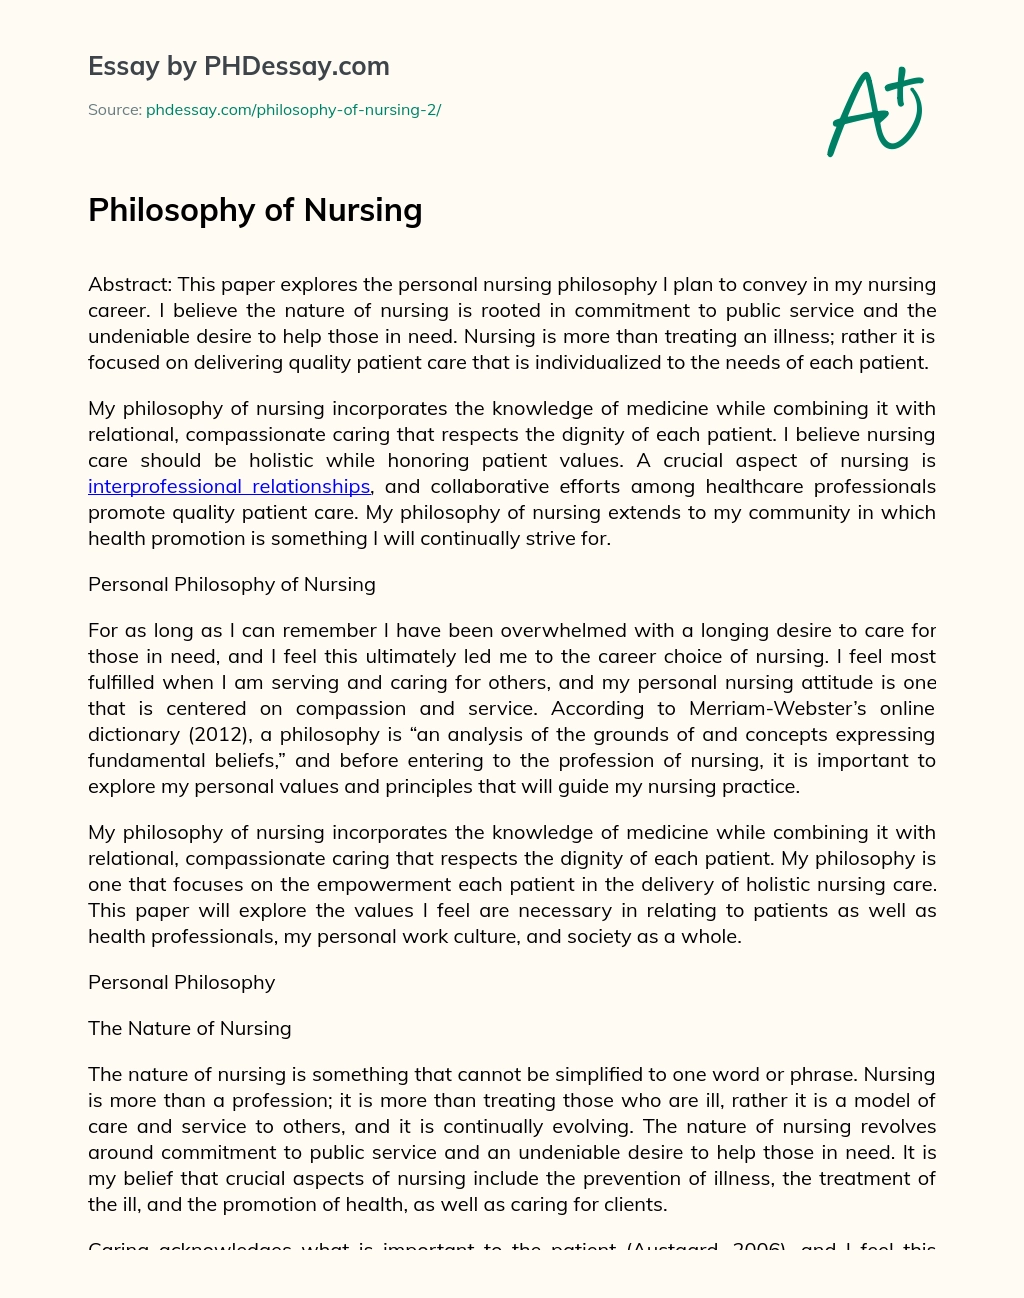 Philosophy of Nursing essay